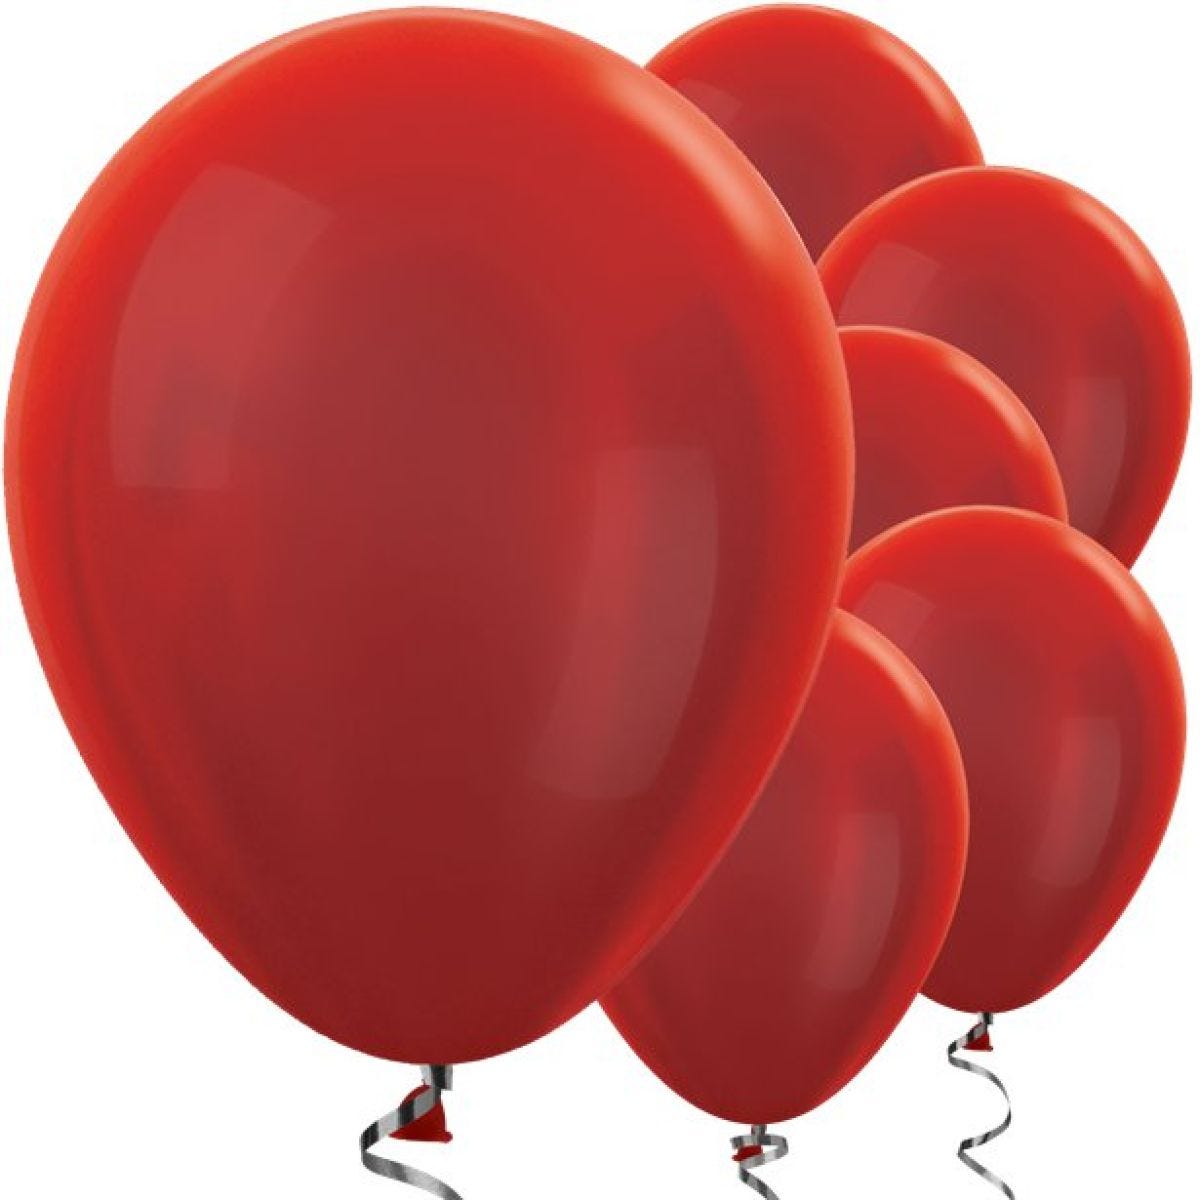 Red Metallic Balloons - 12" Latex Balloons